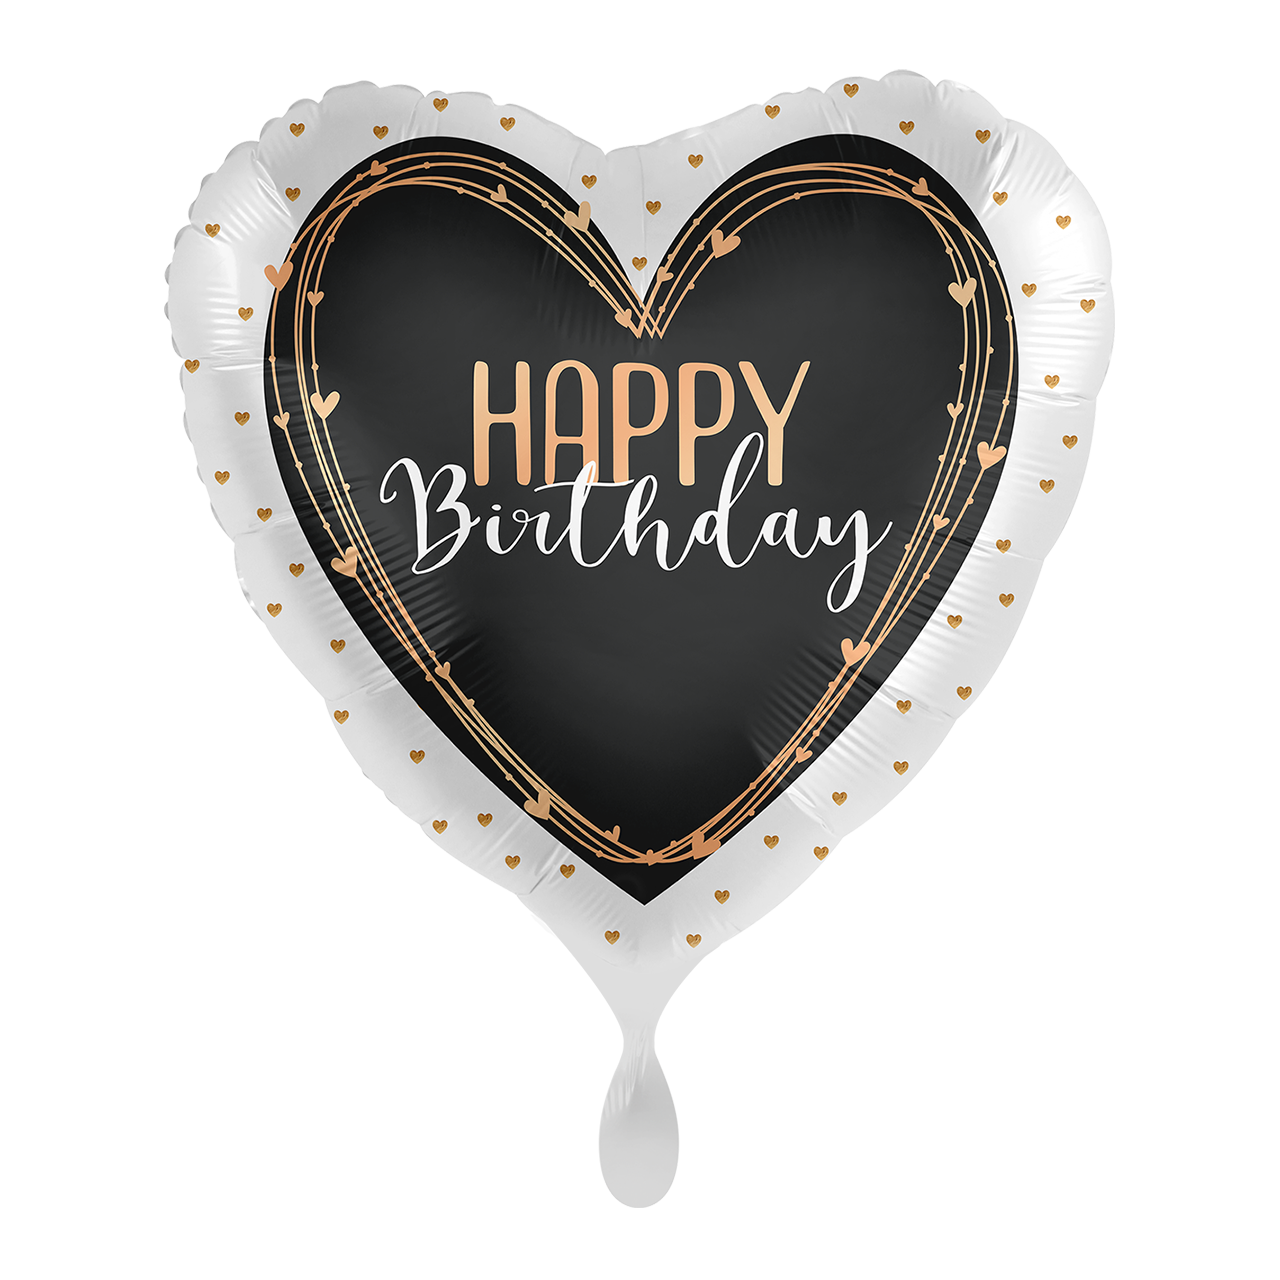 1 Ballon - Happy Birthday Elegant Hearts